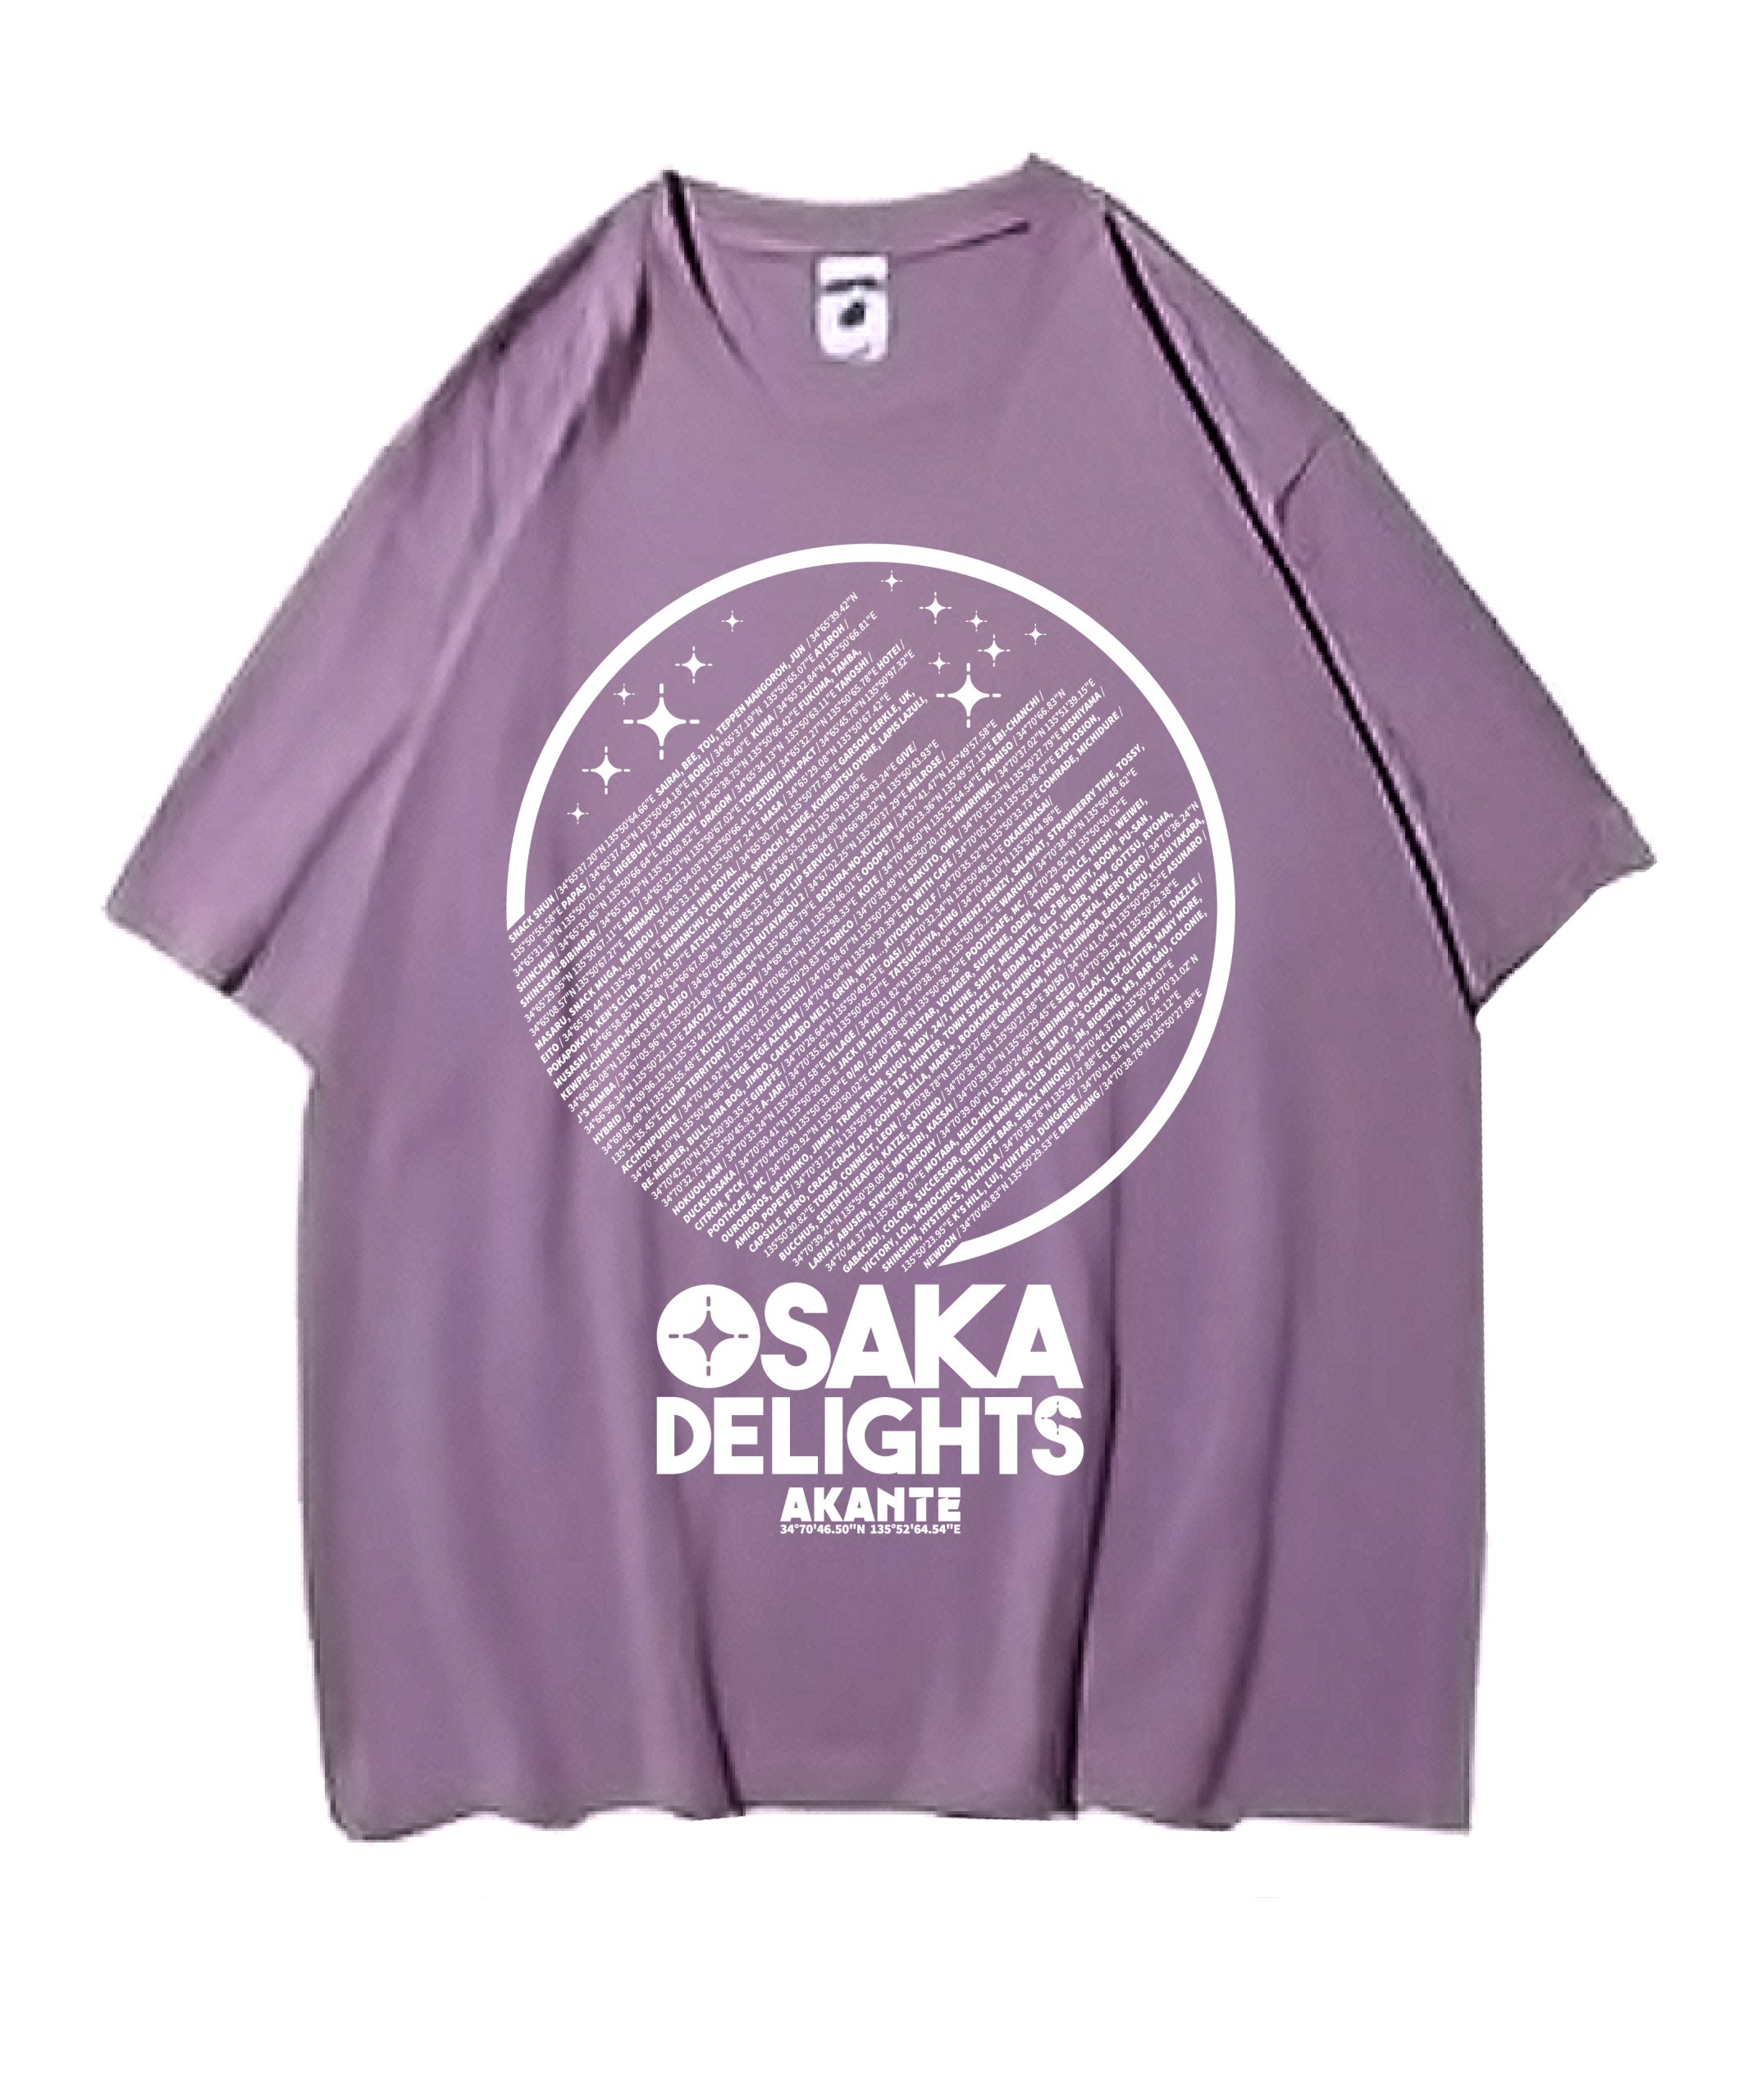 OSAKA DELIGHTS Tシャツ パープルxピンク